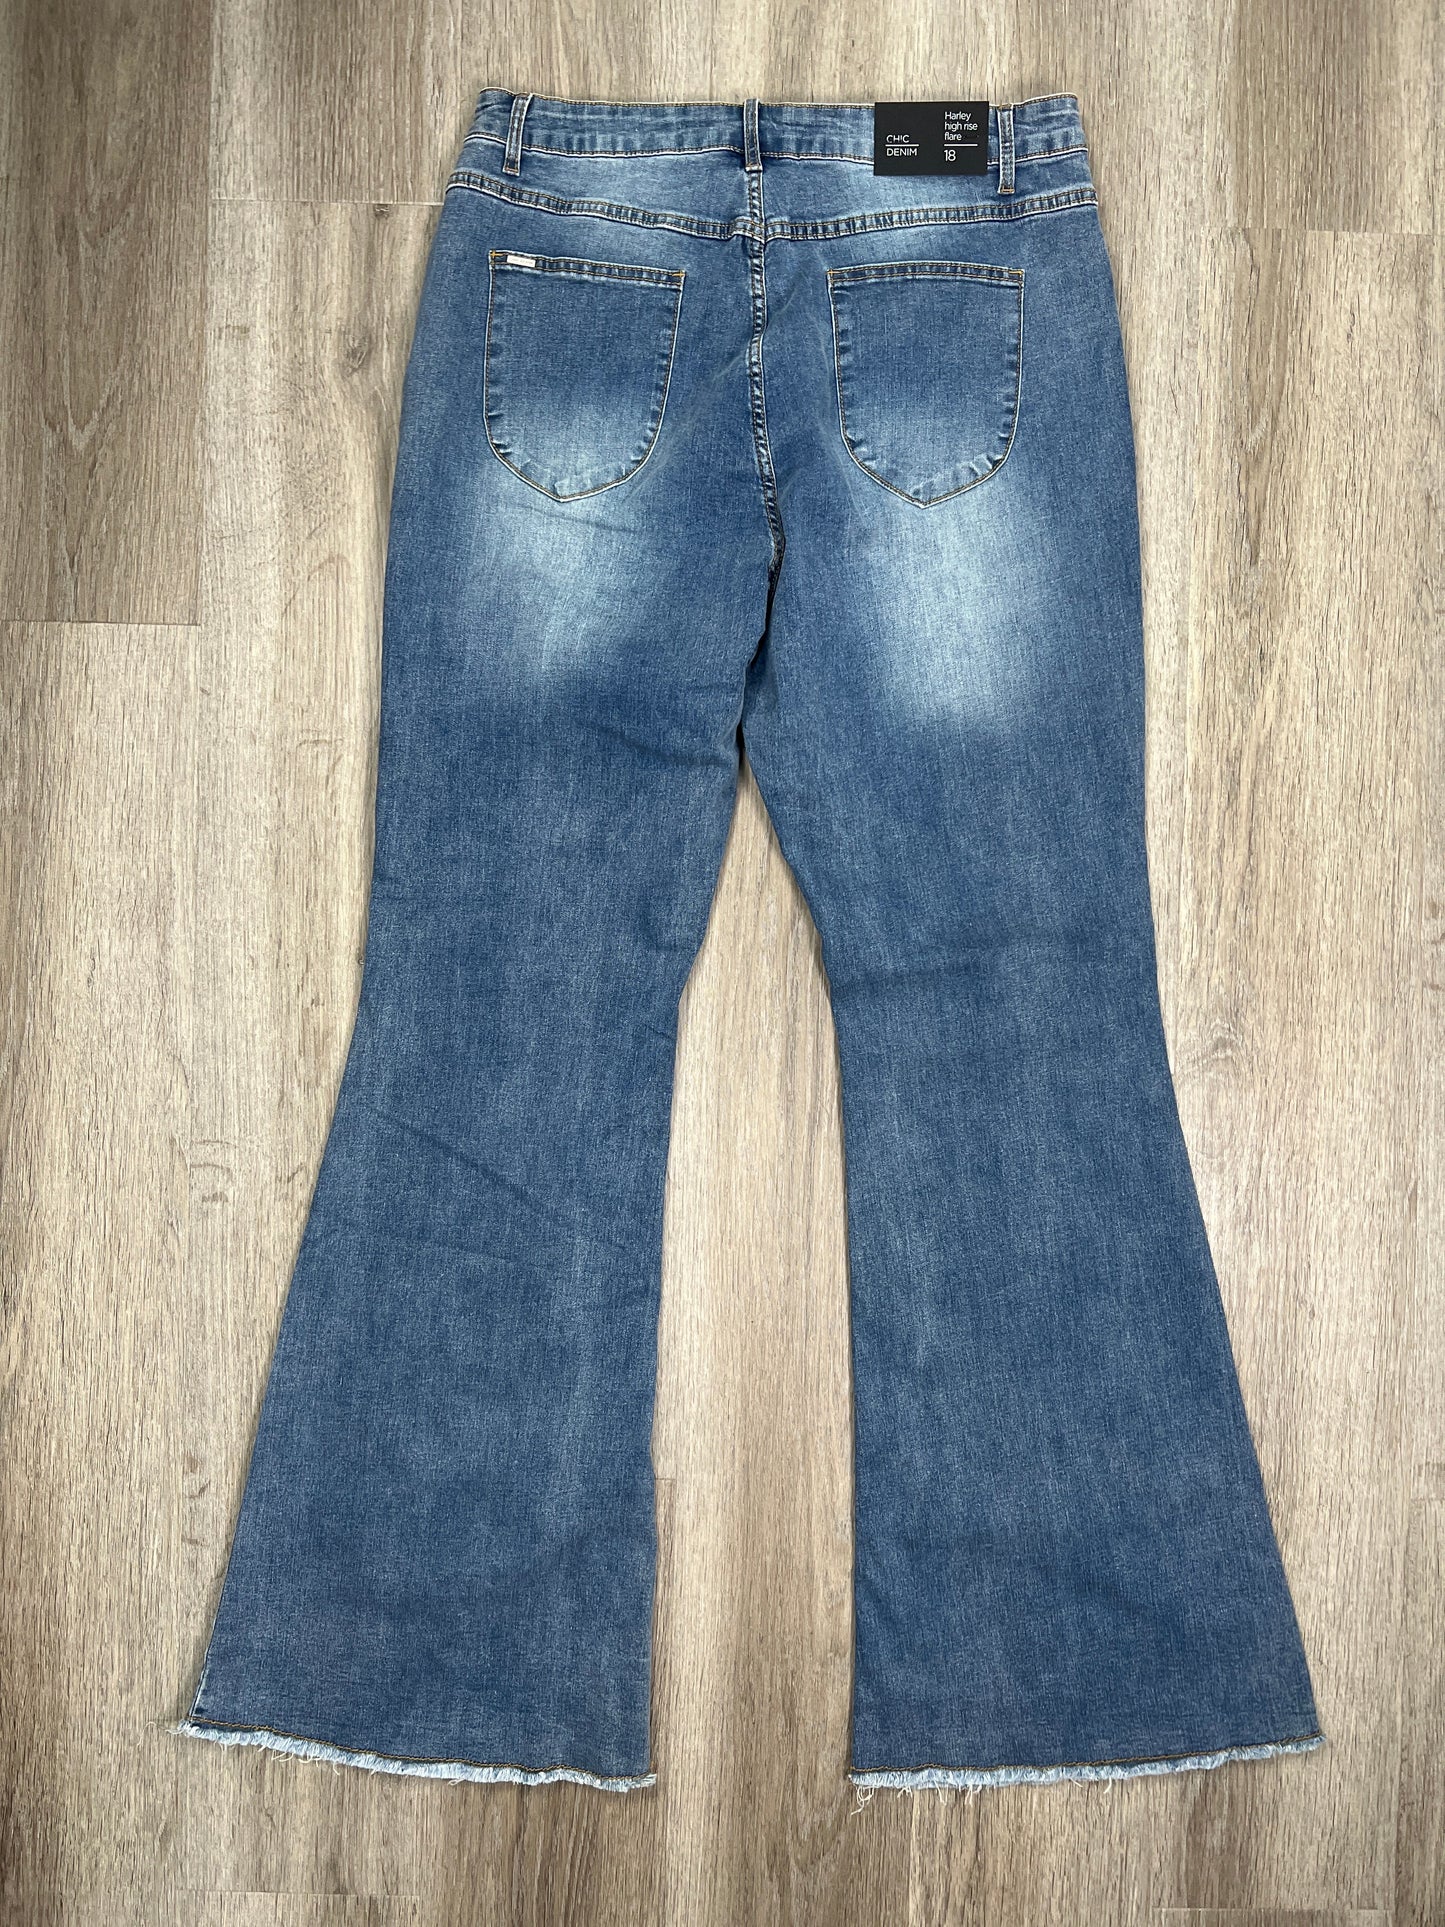 Blue Denim Jeans Flared Chic, Size 18